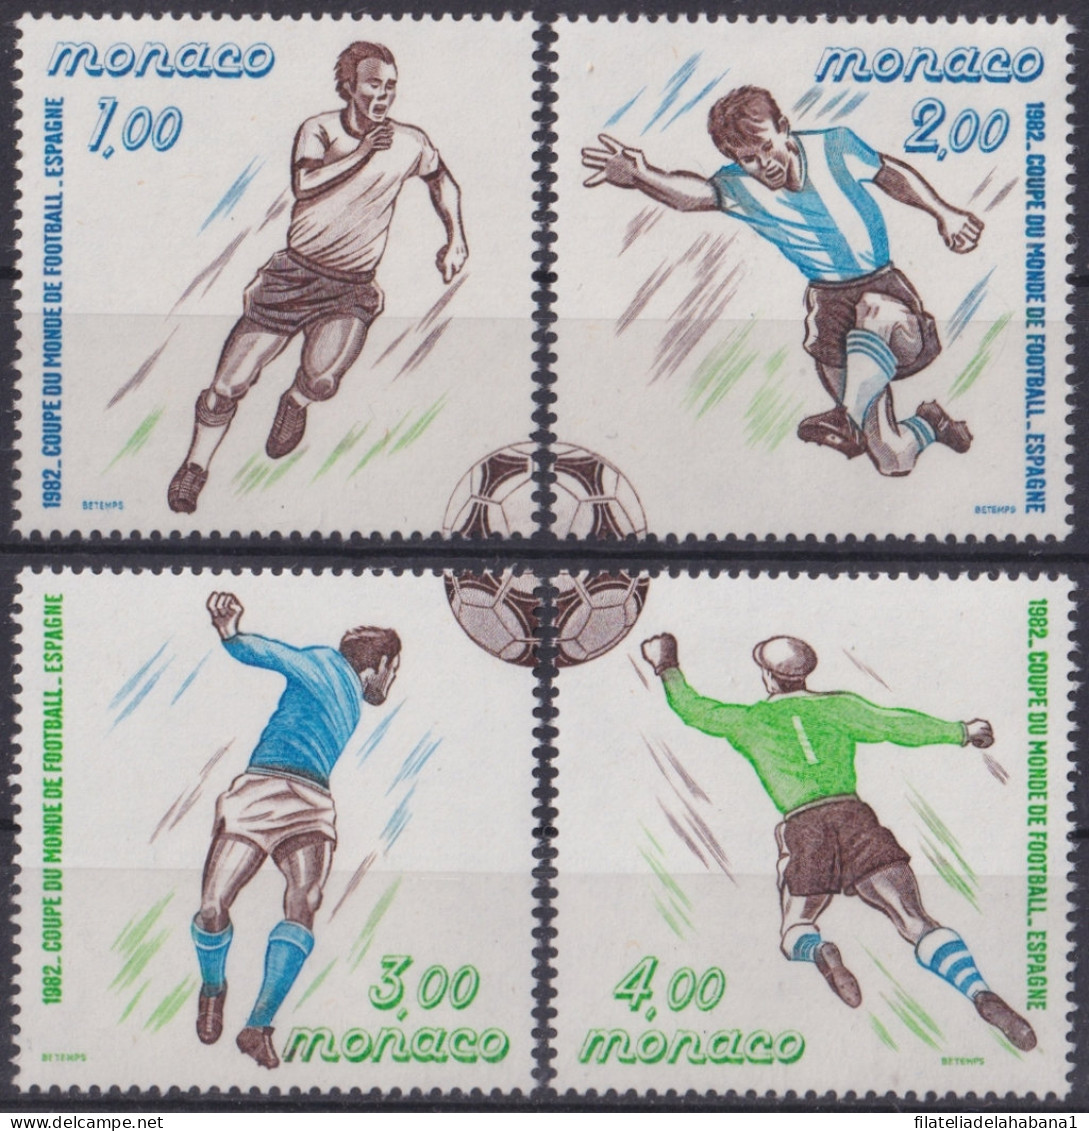 F-EX47577 MONACO MNH 1982 SPAIN CUP SOCCER FOOTBALL.  - 1982 – Spain